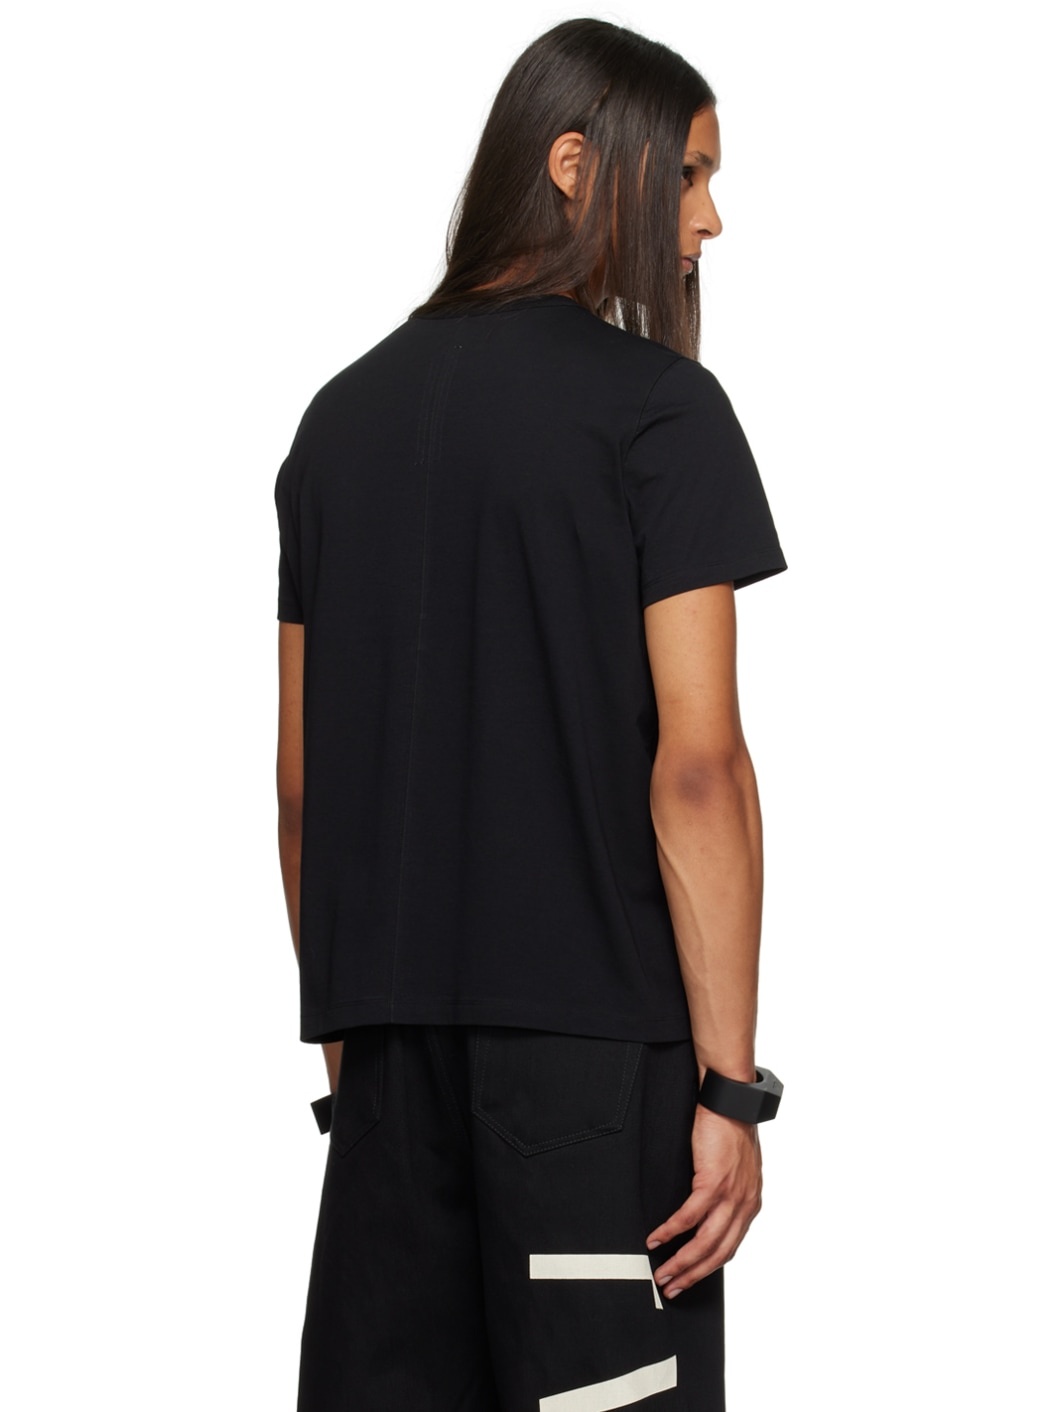 SSENSE Exclusive Black KEMBRA PFAHLER Edition Level T-Shirt - 3